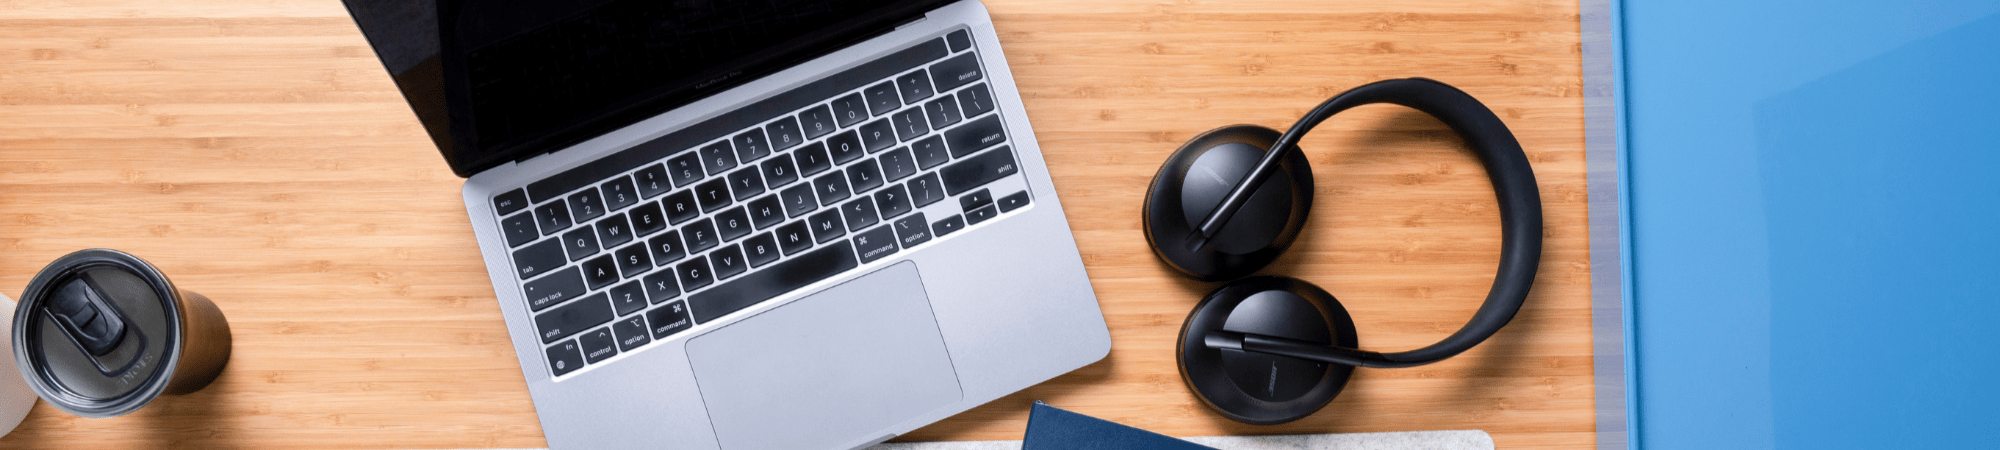 Laptop and headphones on a desk for vlogging